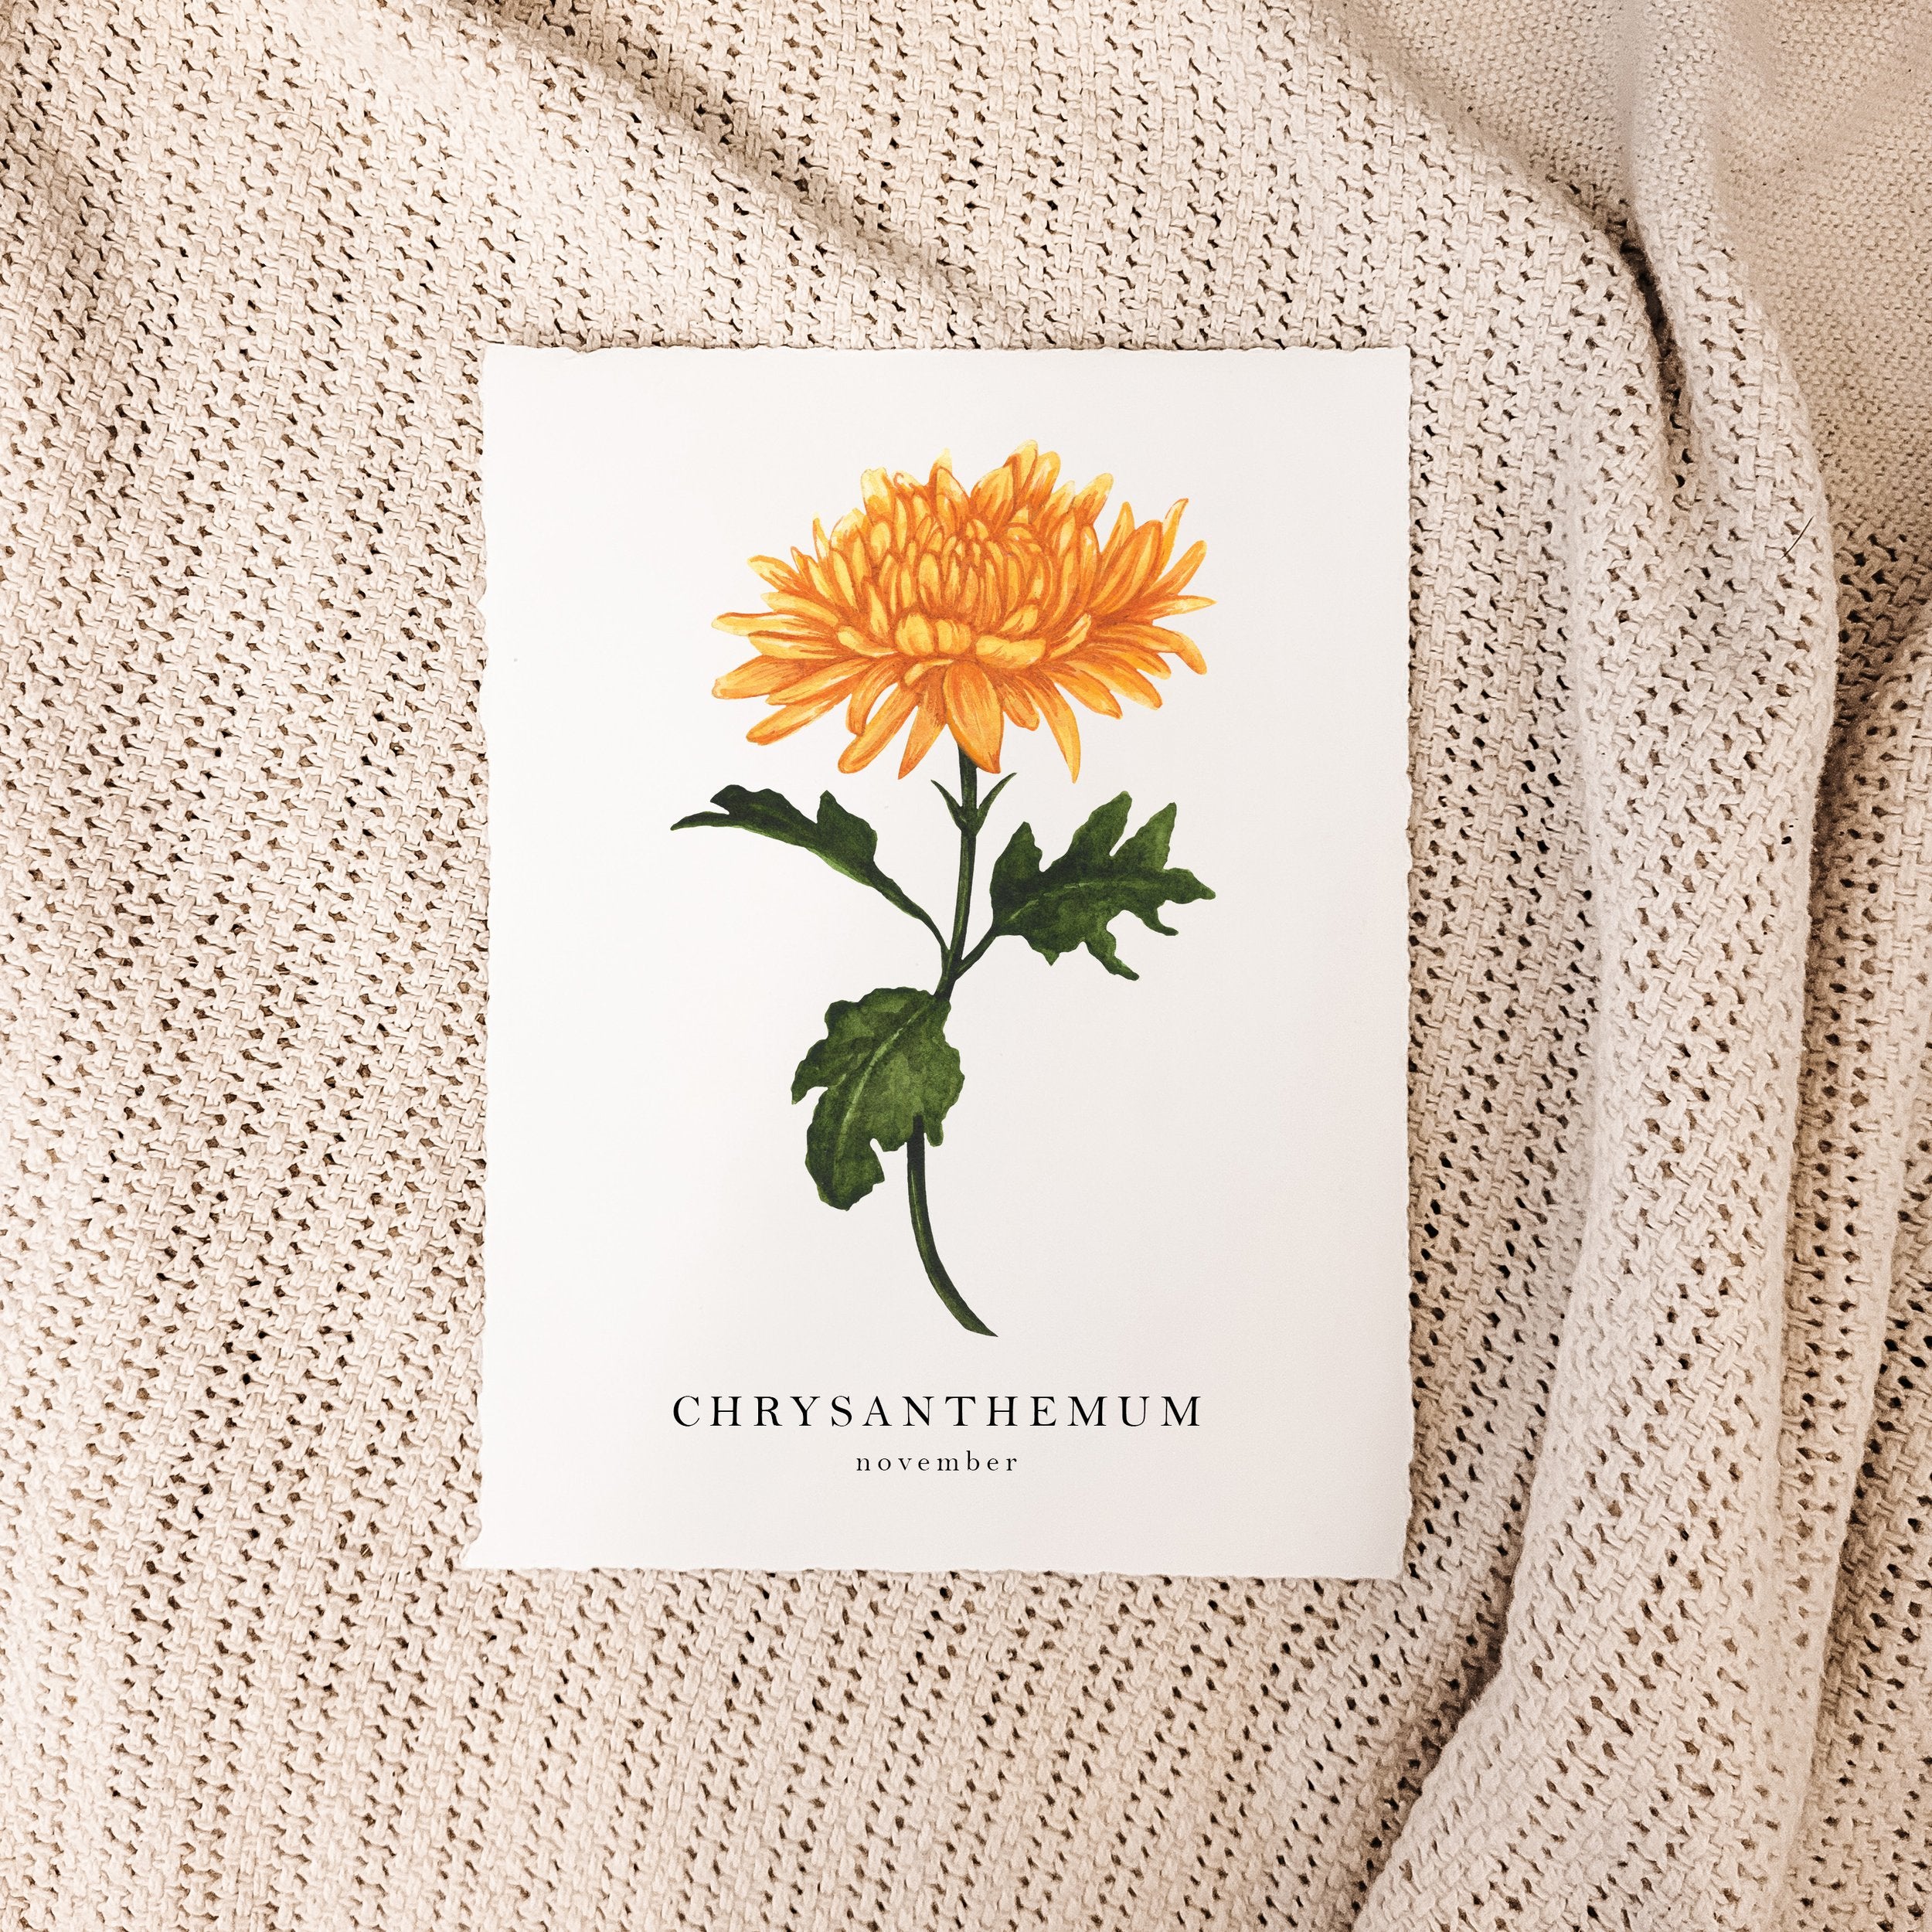 Chrysanthemum November Birth Month Flower Illustration Stock Vector -  Illustration of black, chrysanthemum: 244911083